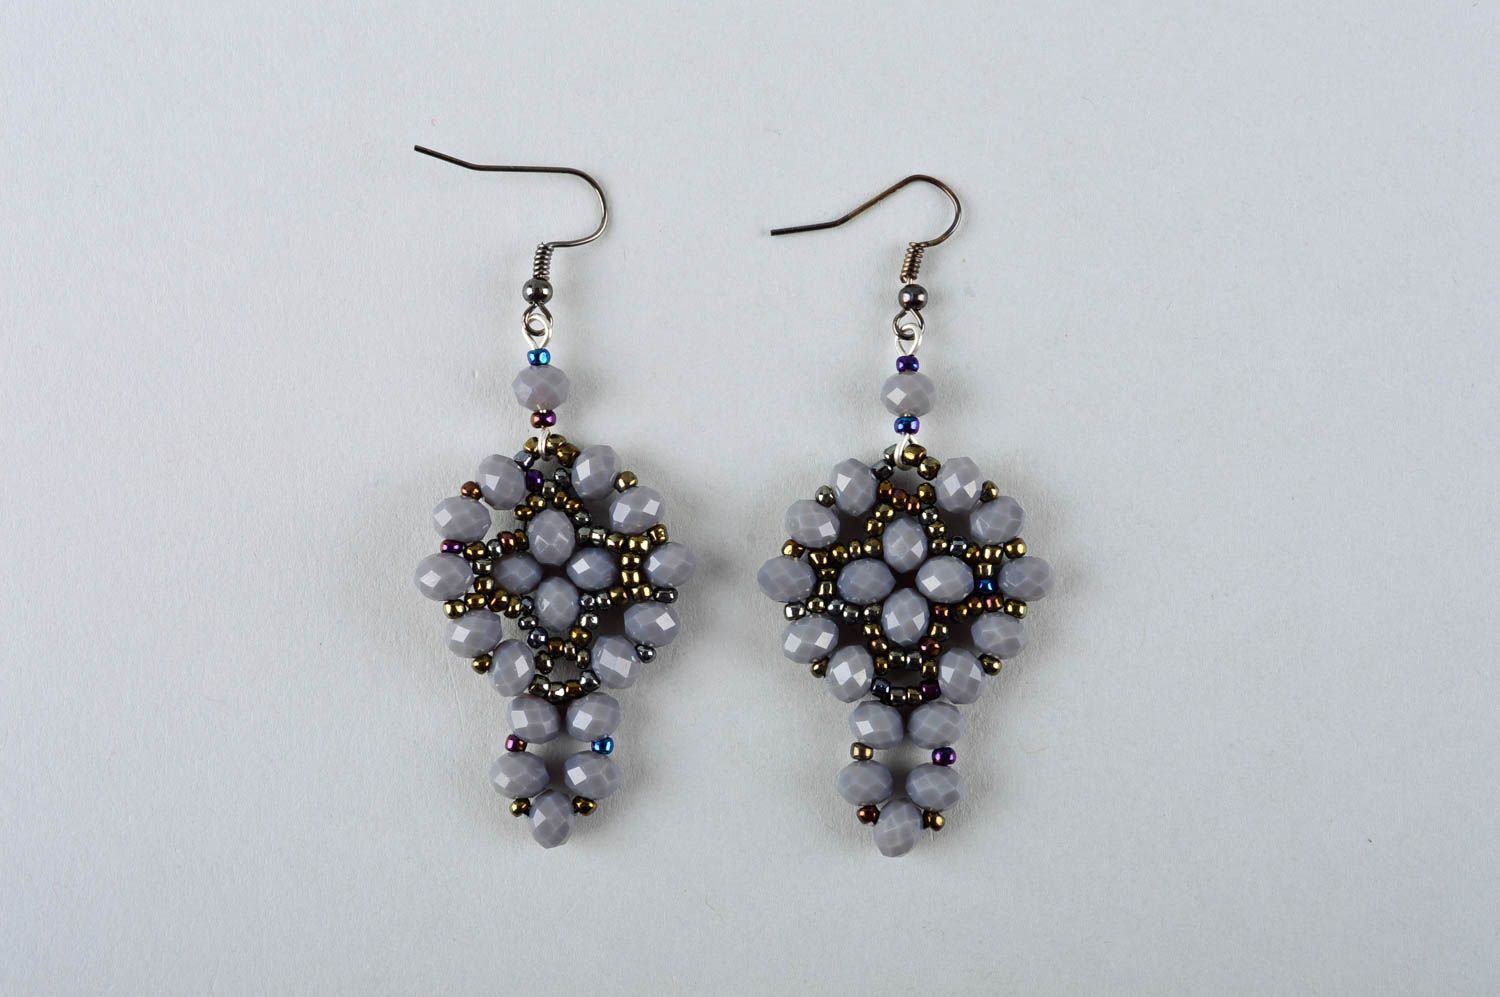 Handmade earrings bead earrings designer accessories fashion jewelry gift ideas photo 2